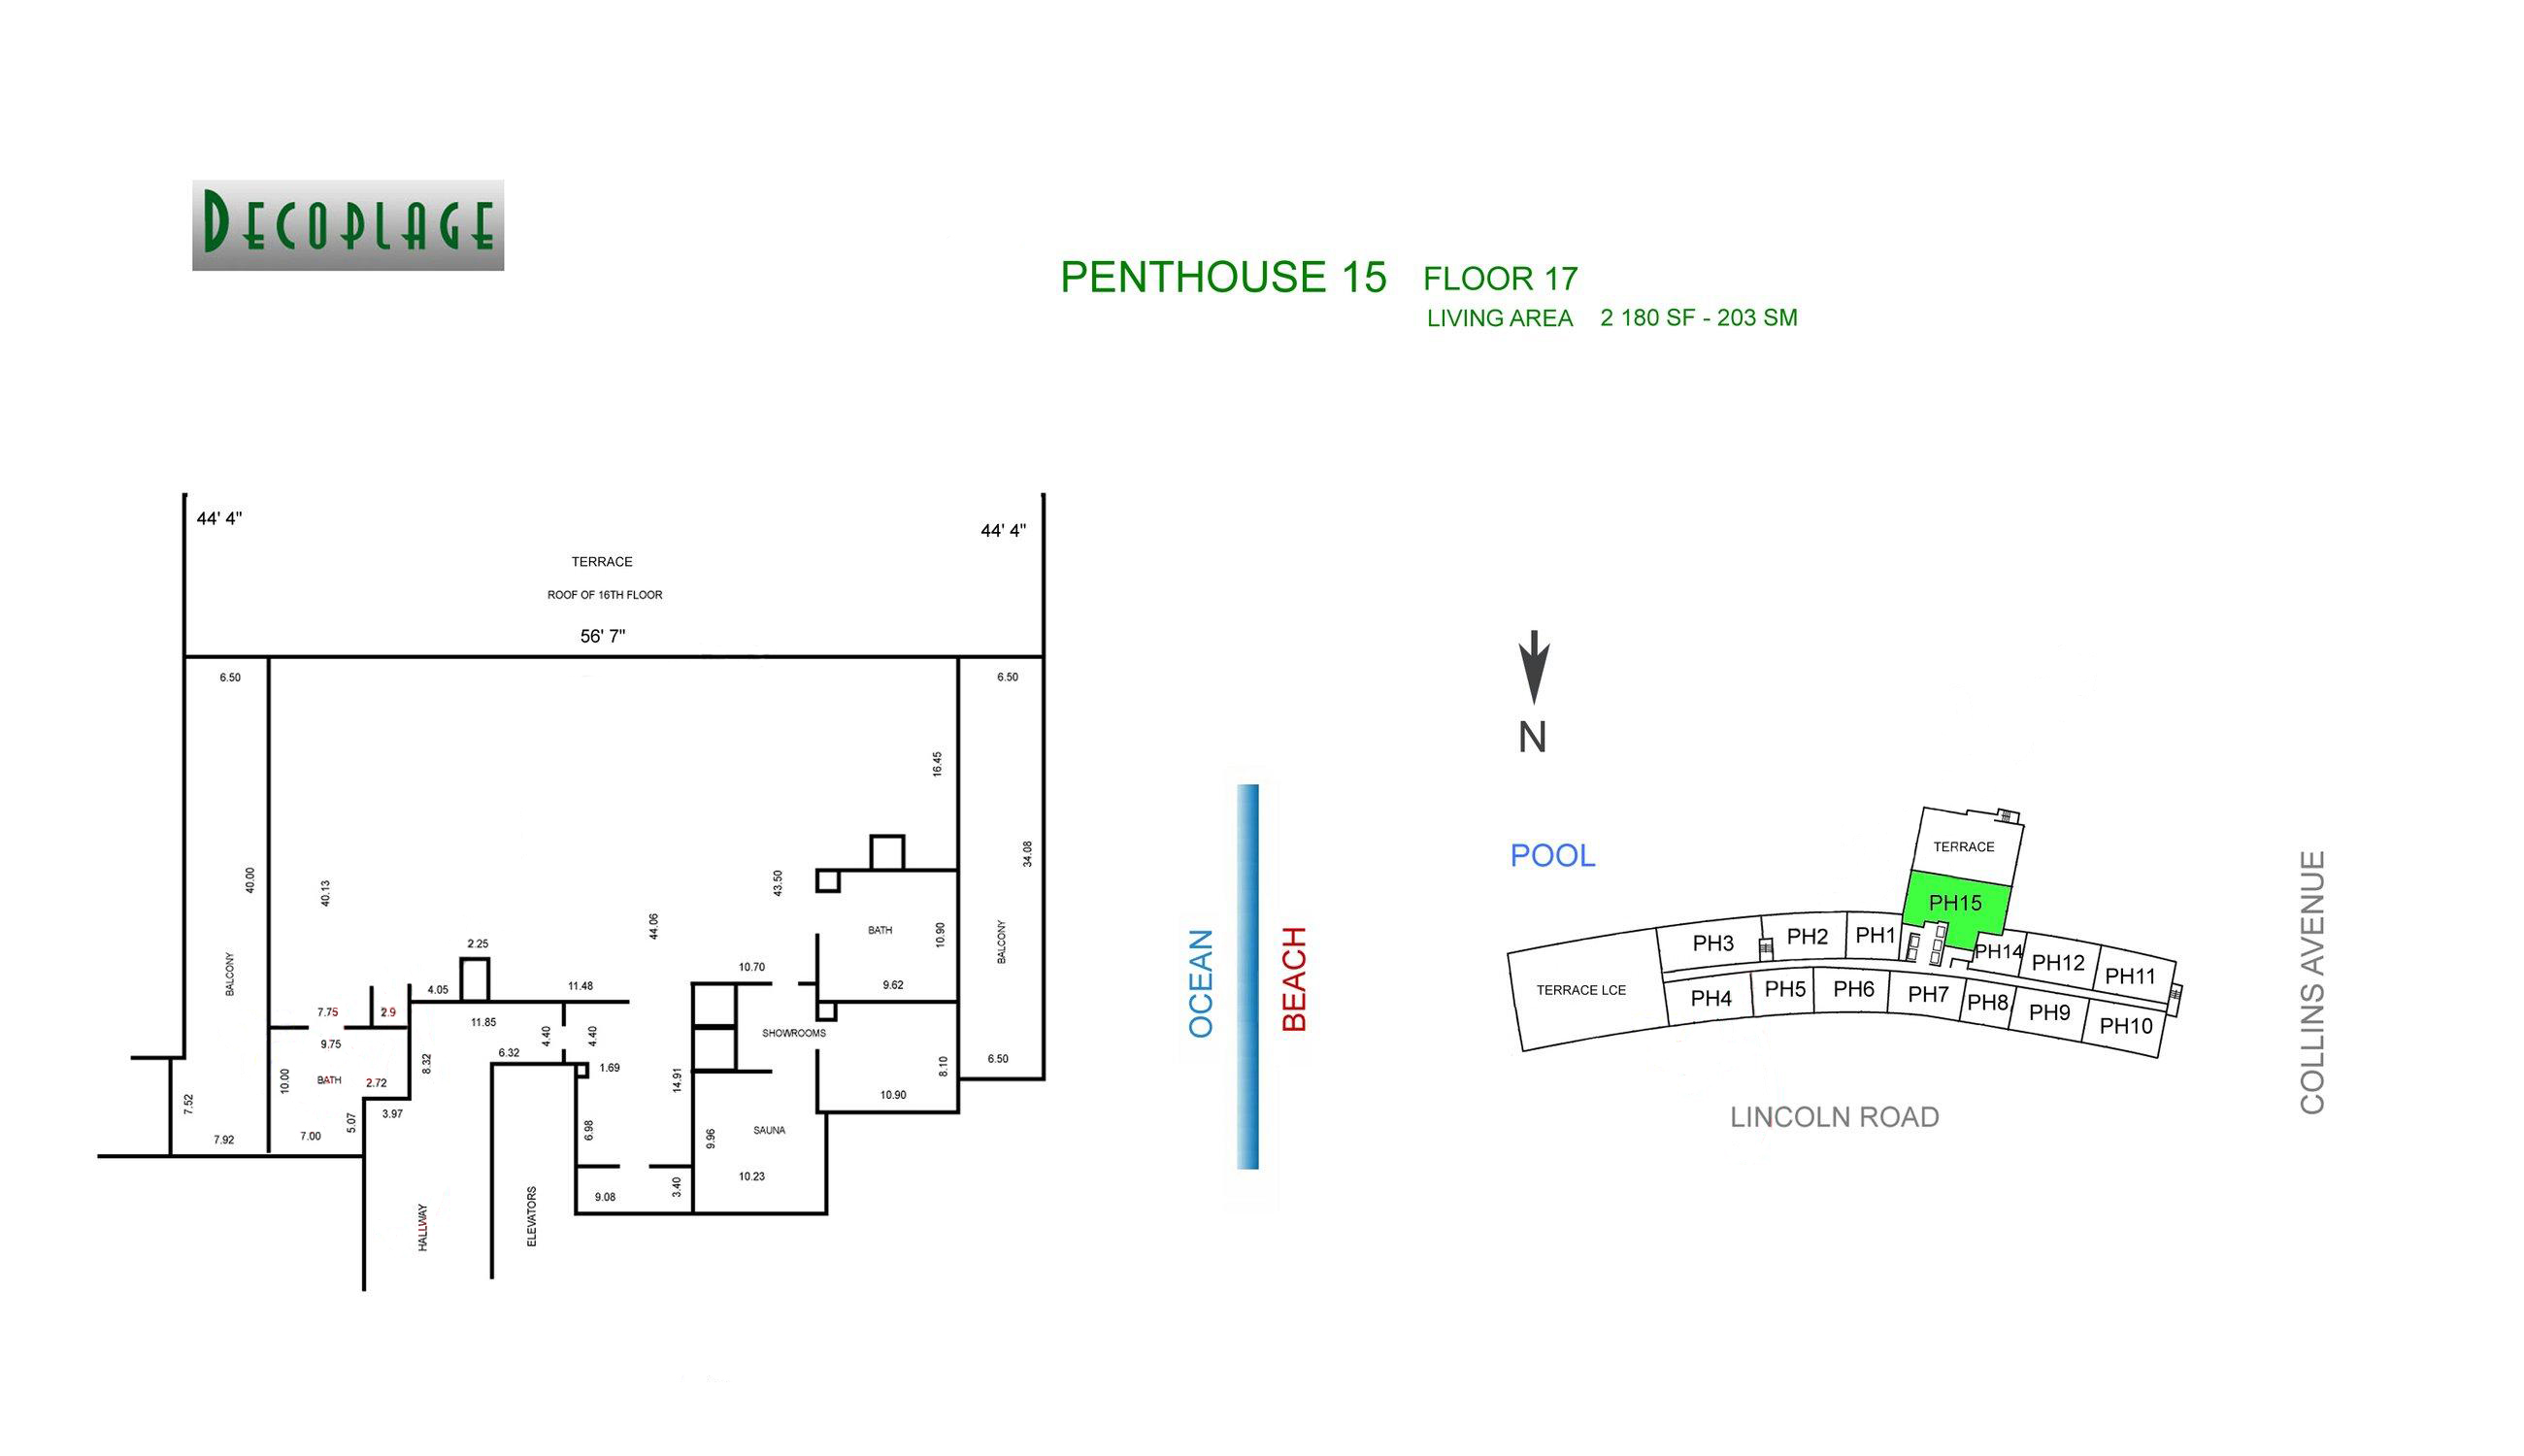 Decoplage Penthouse 15 Floors 17